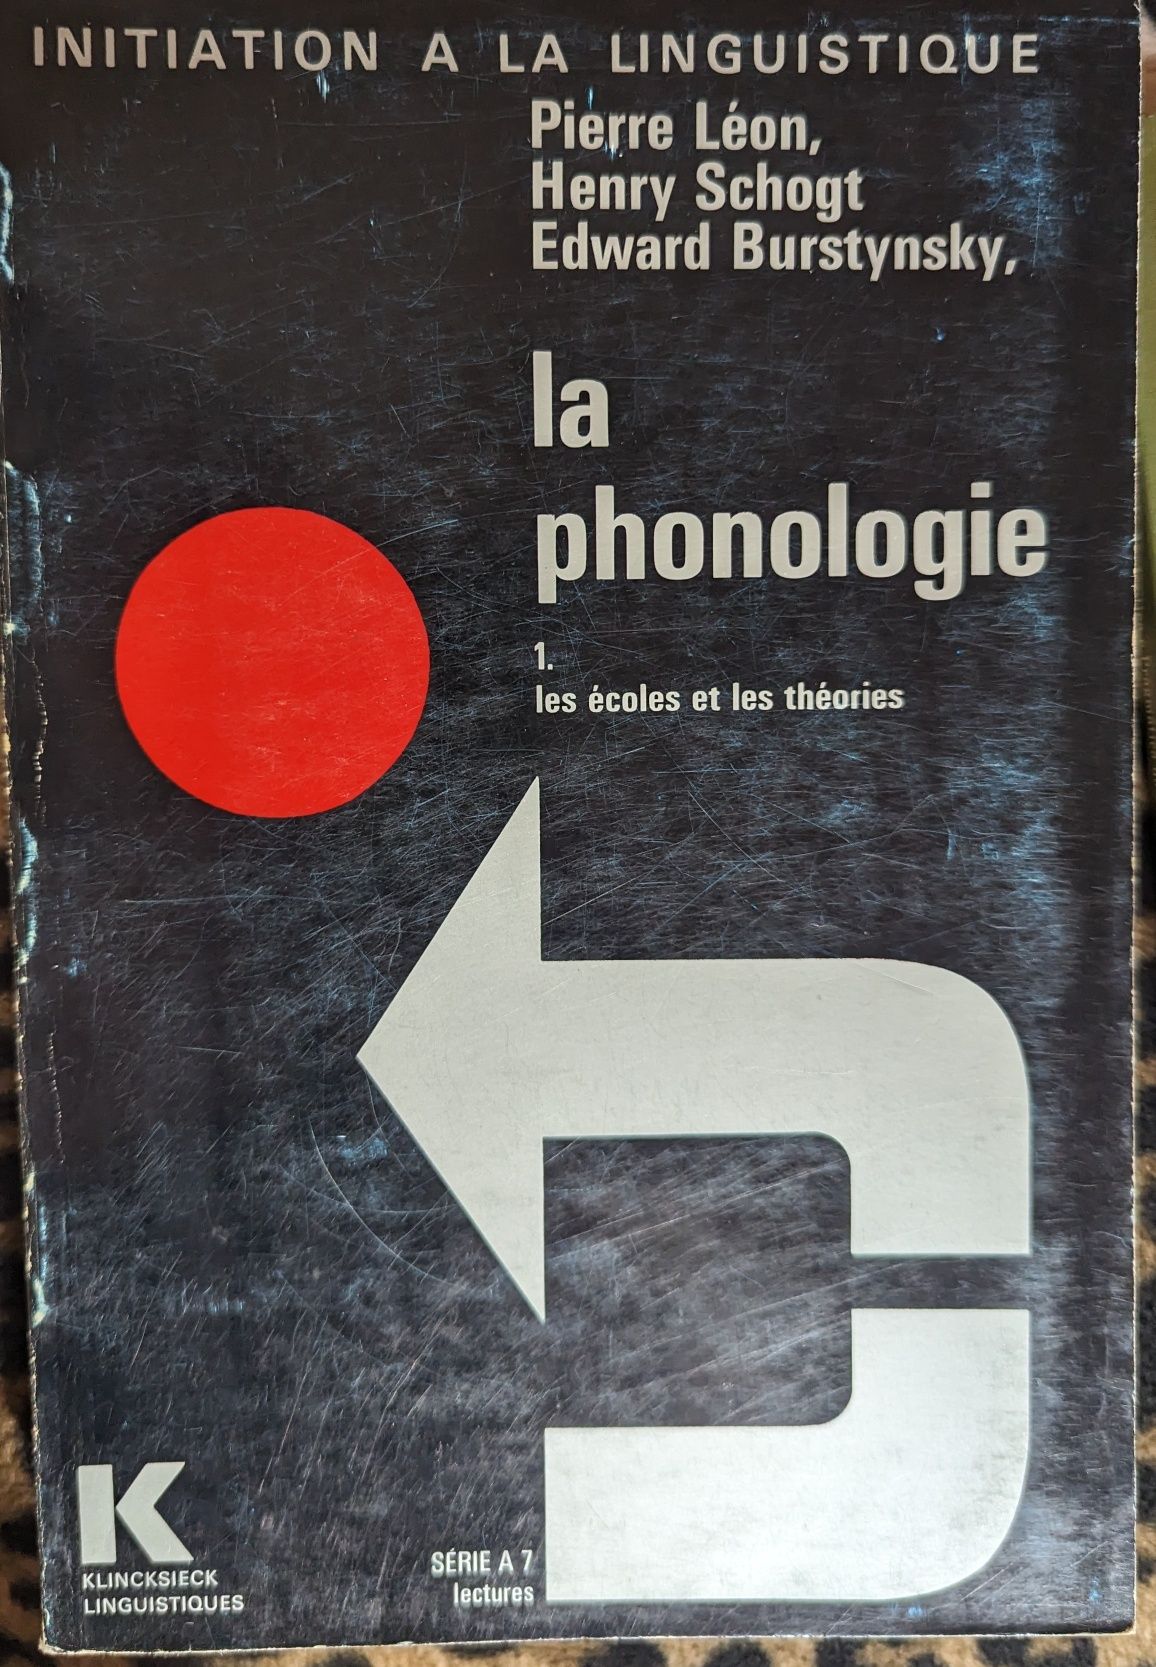 Sociolinguistic theory, la phonologie